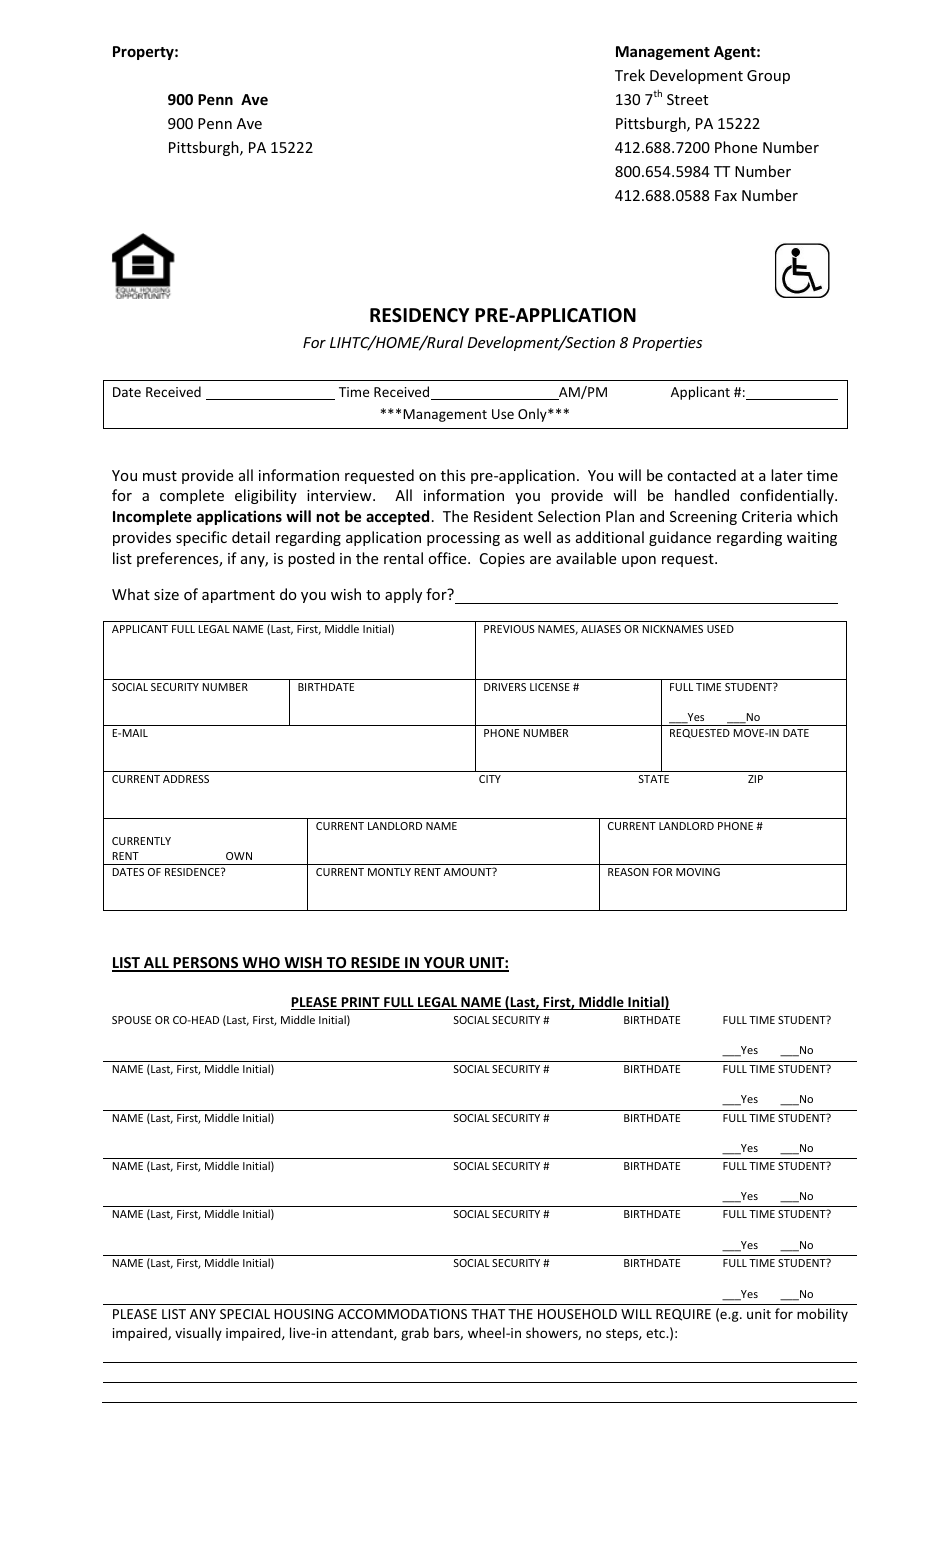 Residency Pre-application Form for LIHTC / Home / Rural Development / Section 8 Properties - Trek Development Group - Pennsylvania, Page 1